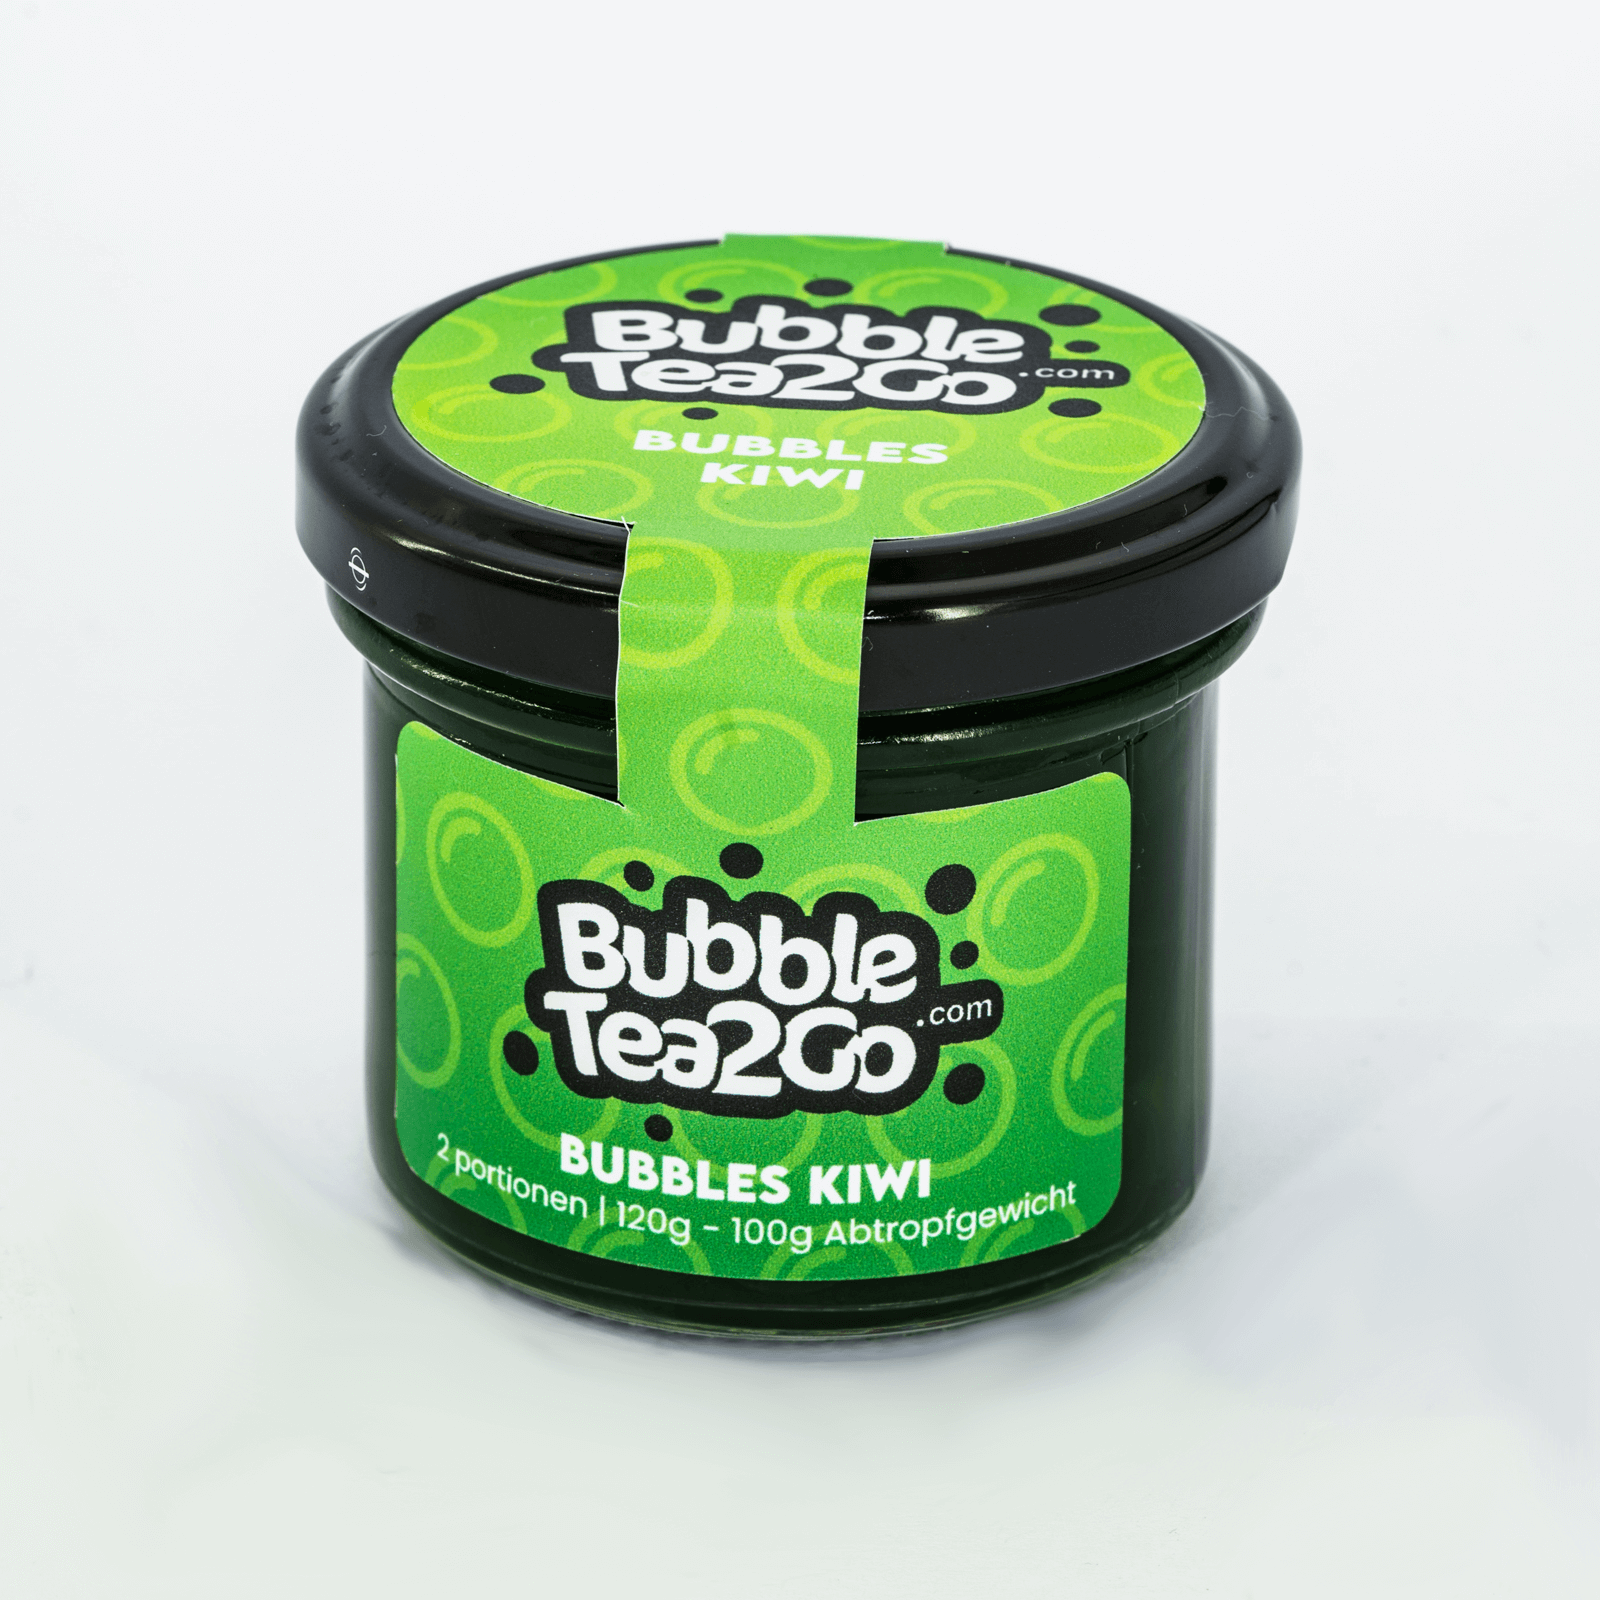 Bubbles - Kiwi 2 servings (120g)